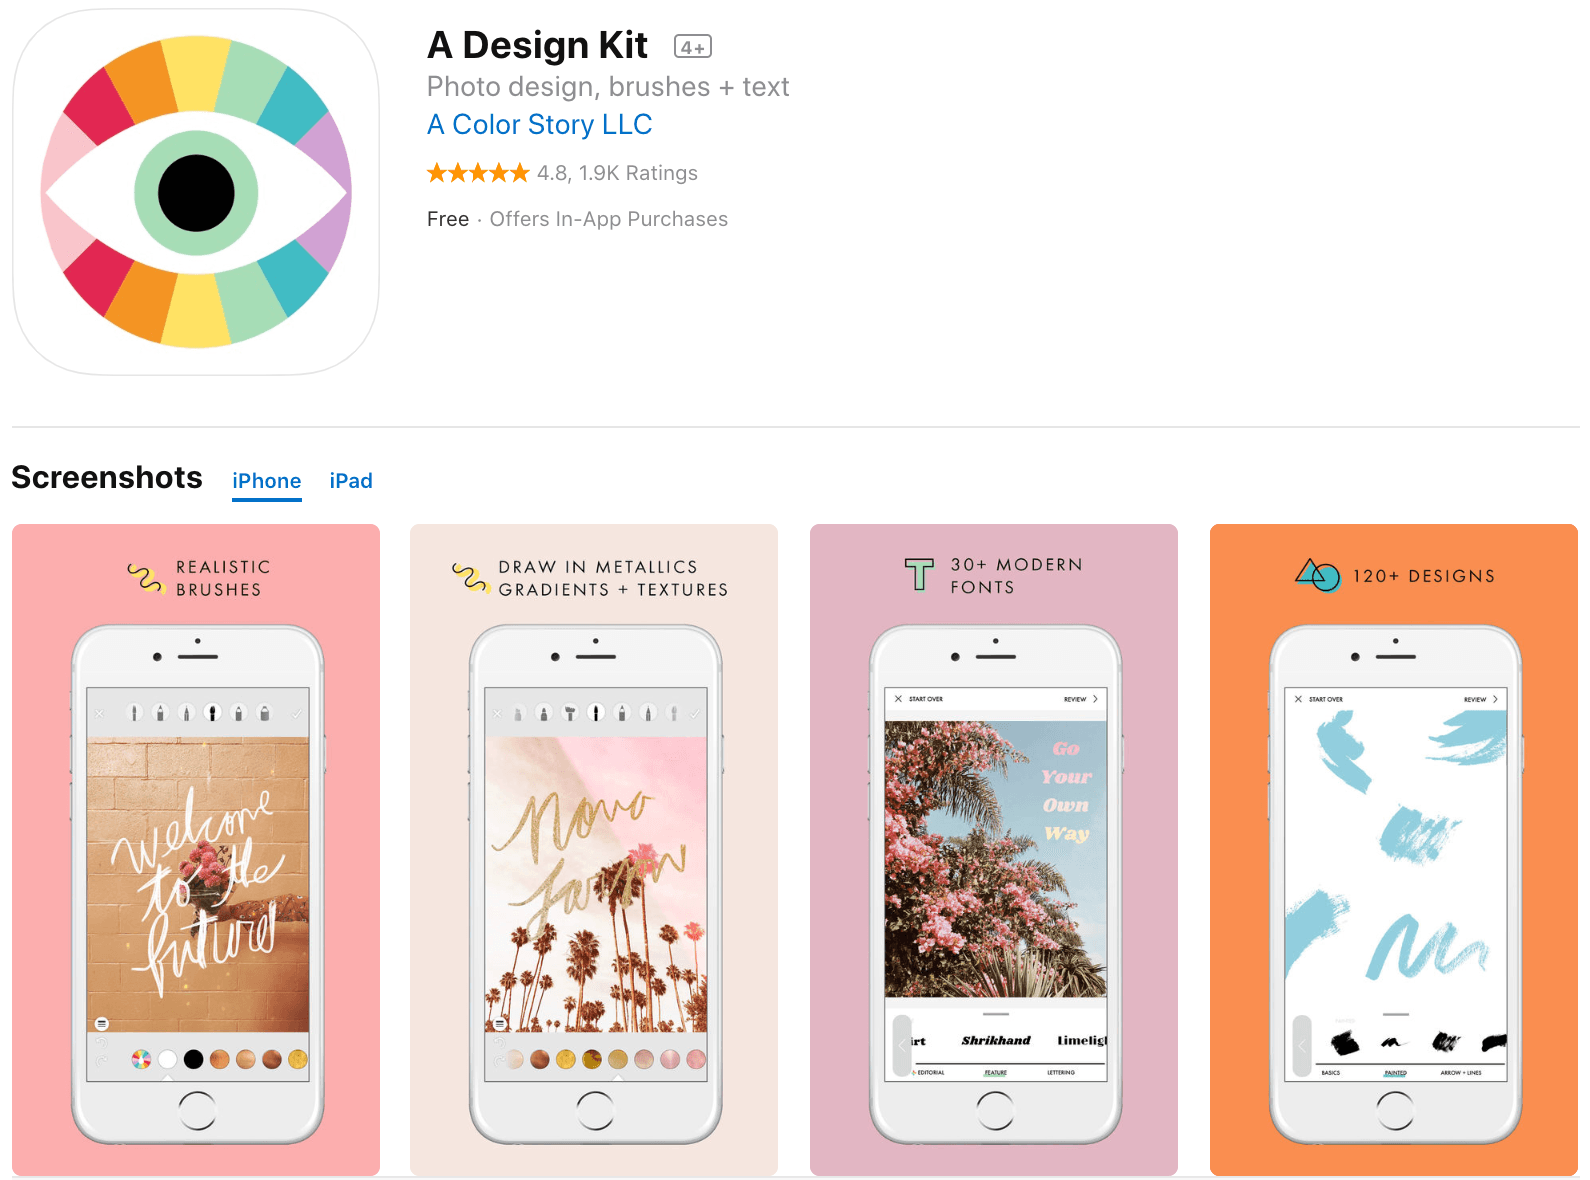 A Design Kit